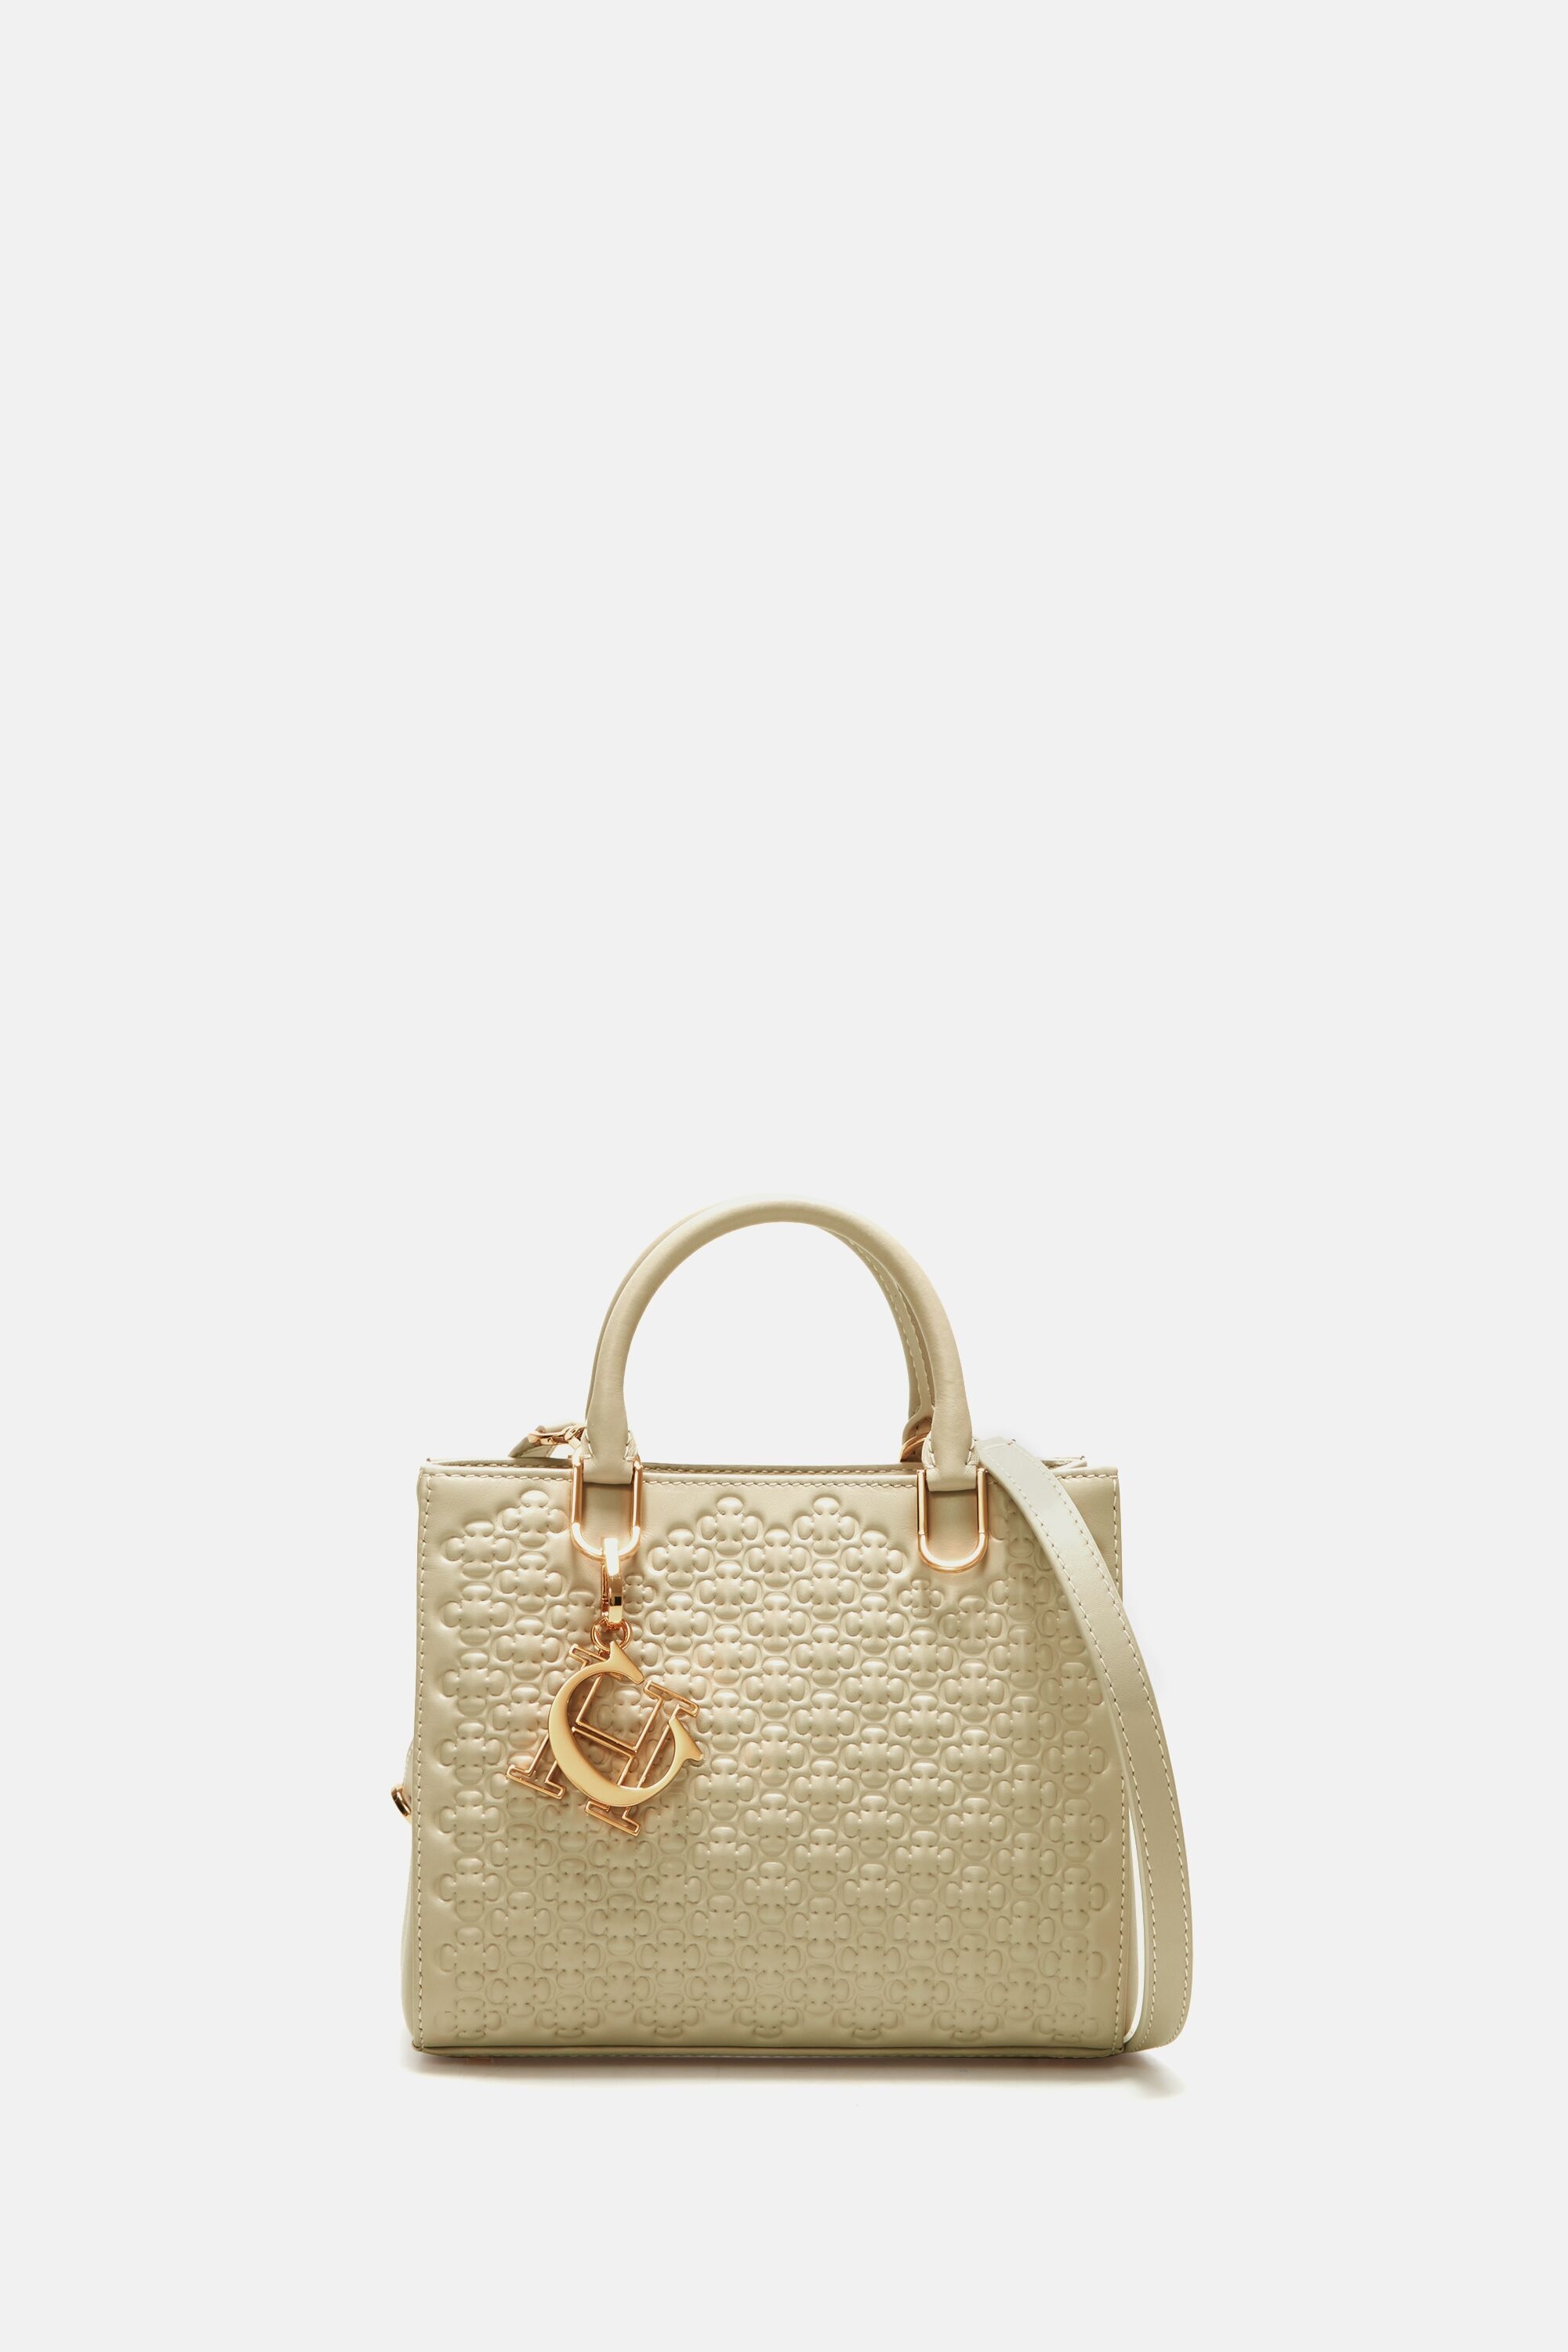 Duchess | Small shoulder bag beige - CH Carolina Herrera United States